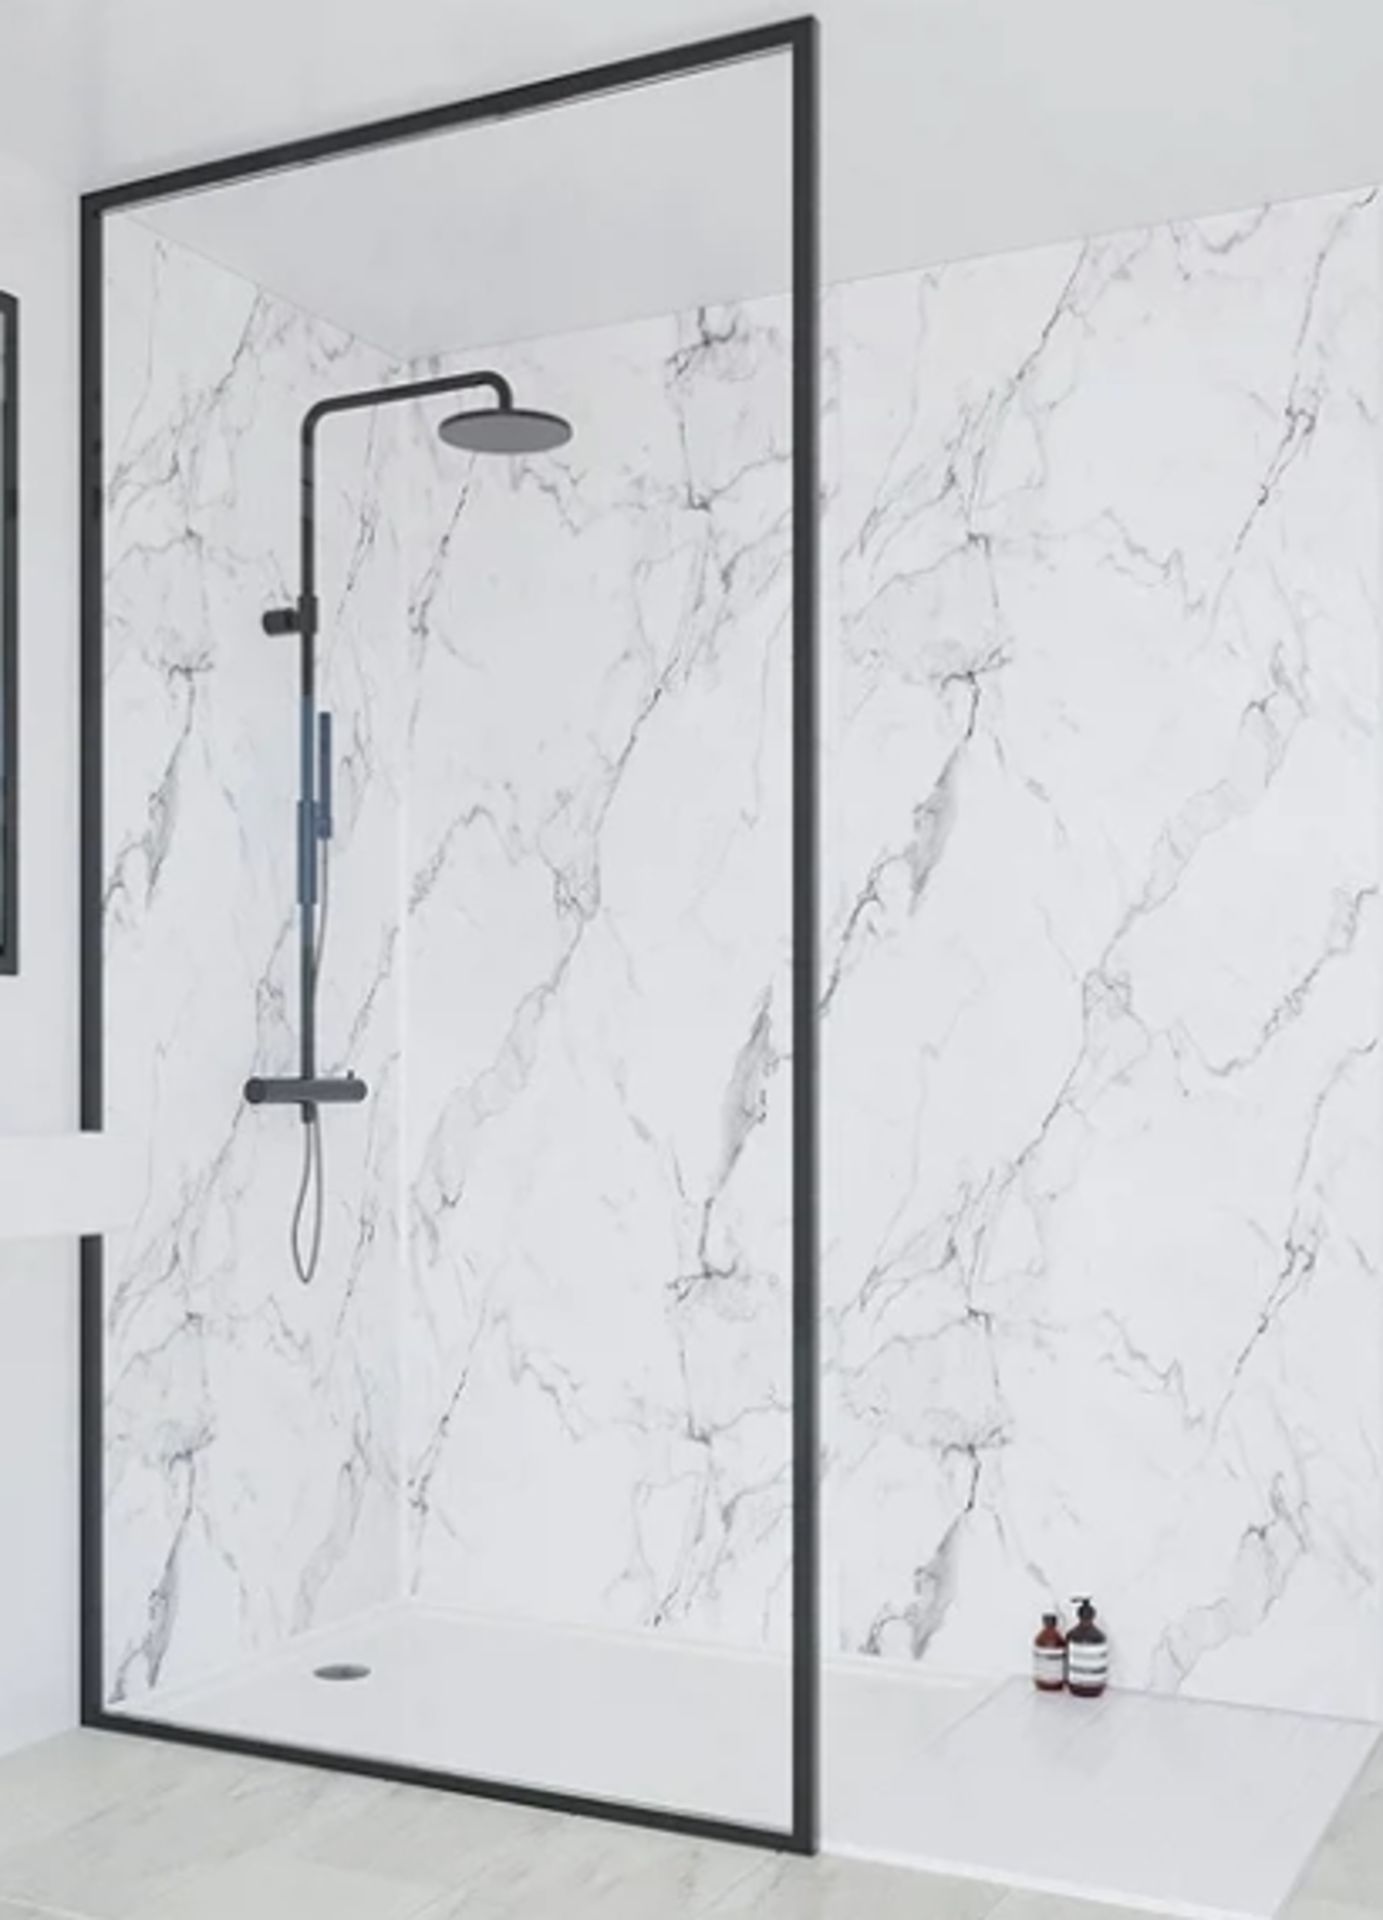 3 x Monolisa Marble Effect Shower Room Glazed Porcelain Wall Tiles - Size: 1800 x 900 x 10.5 cms - - Image 4 of 9